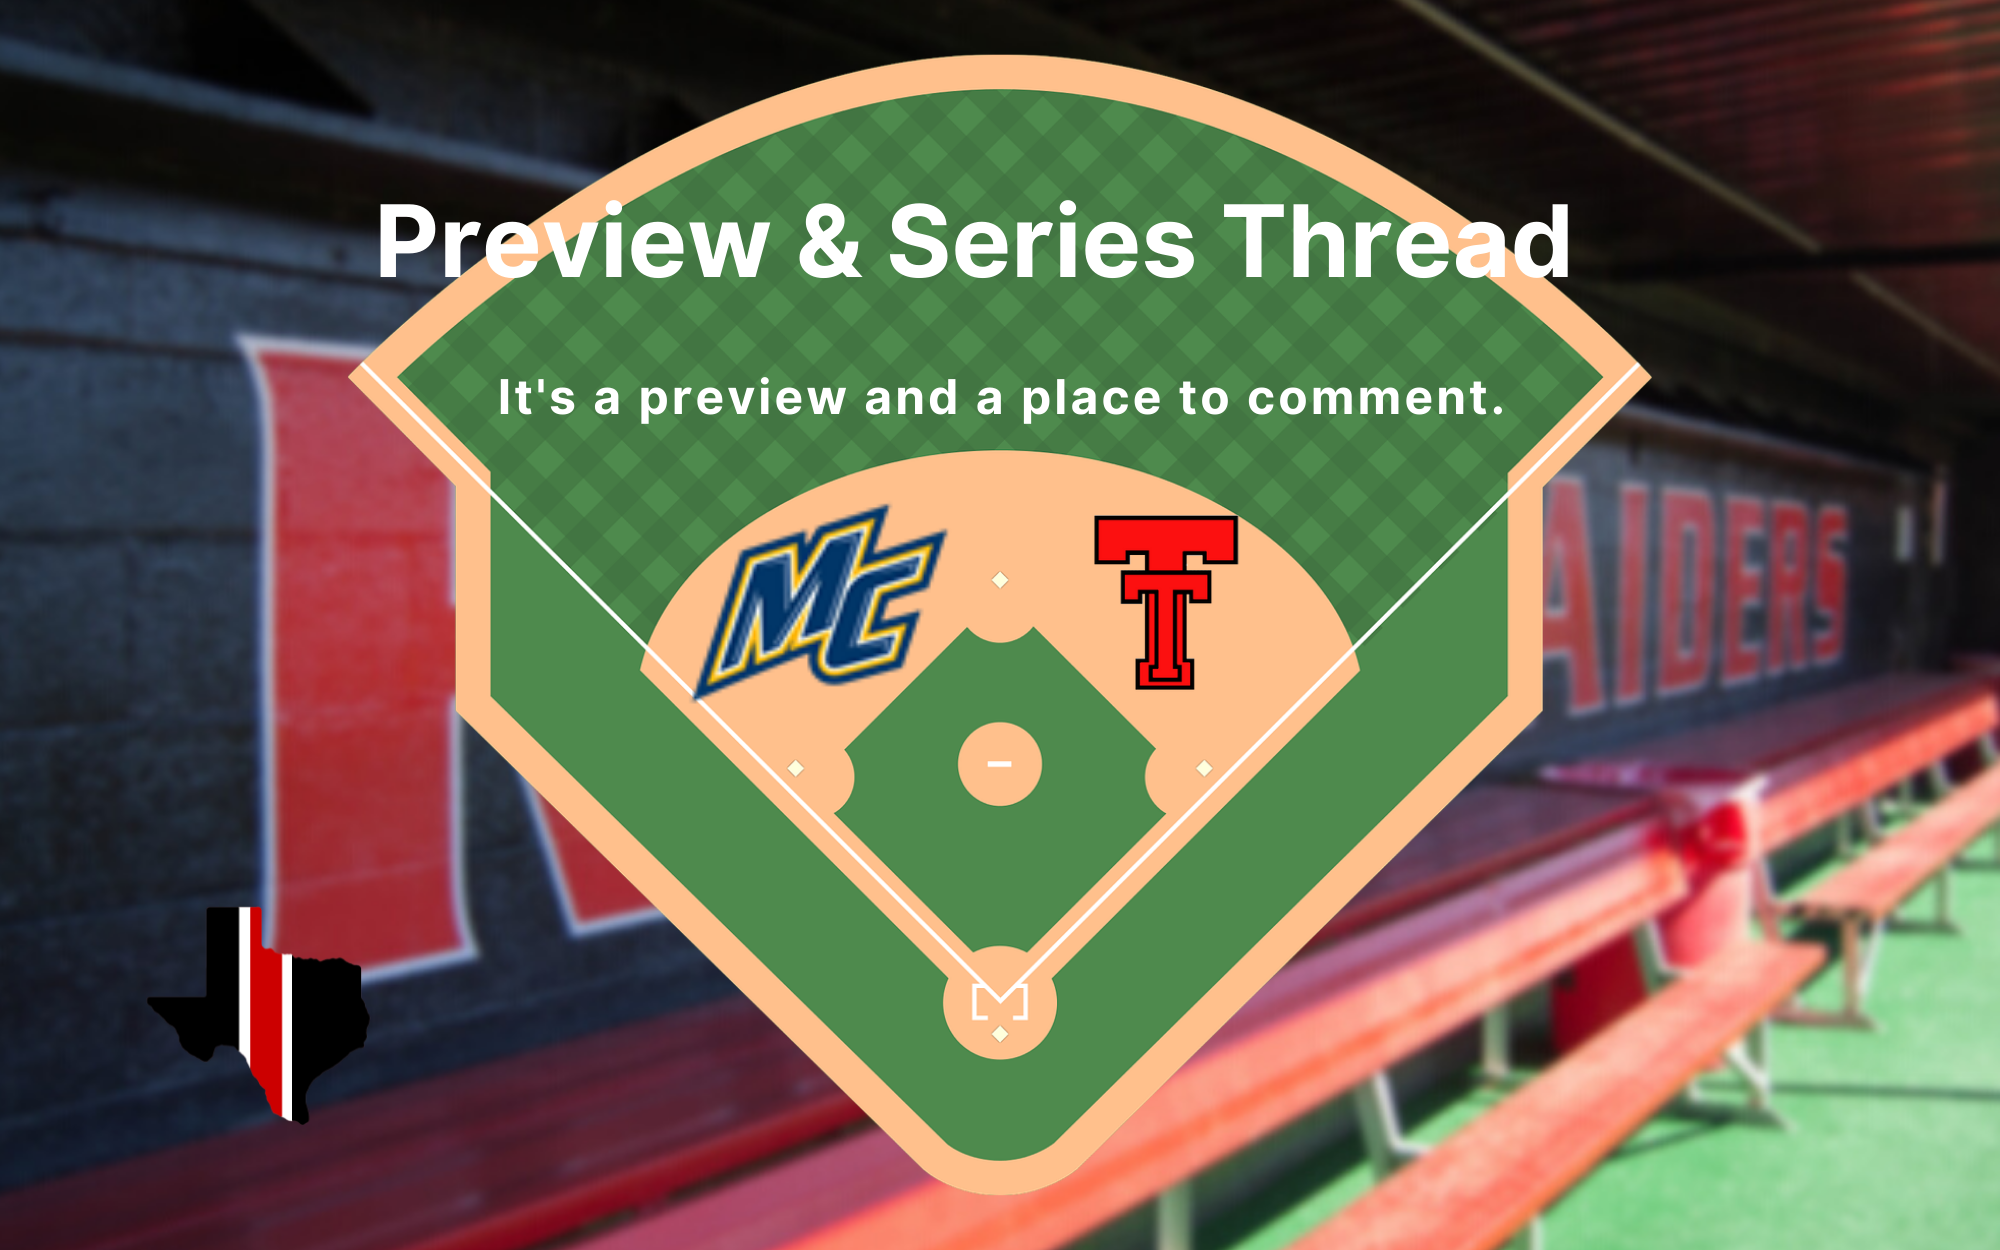 Preview & Series Thread: Merrimack vs. Texas Tech